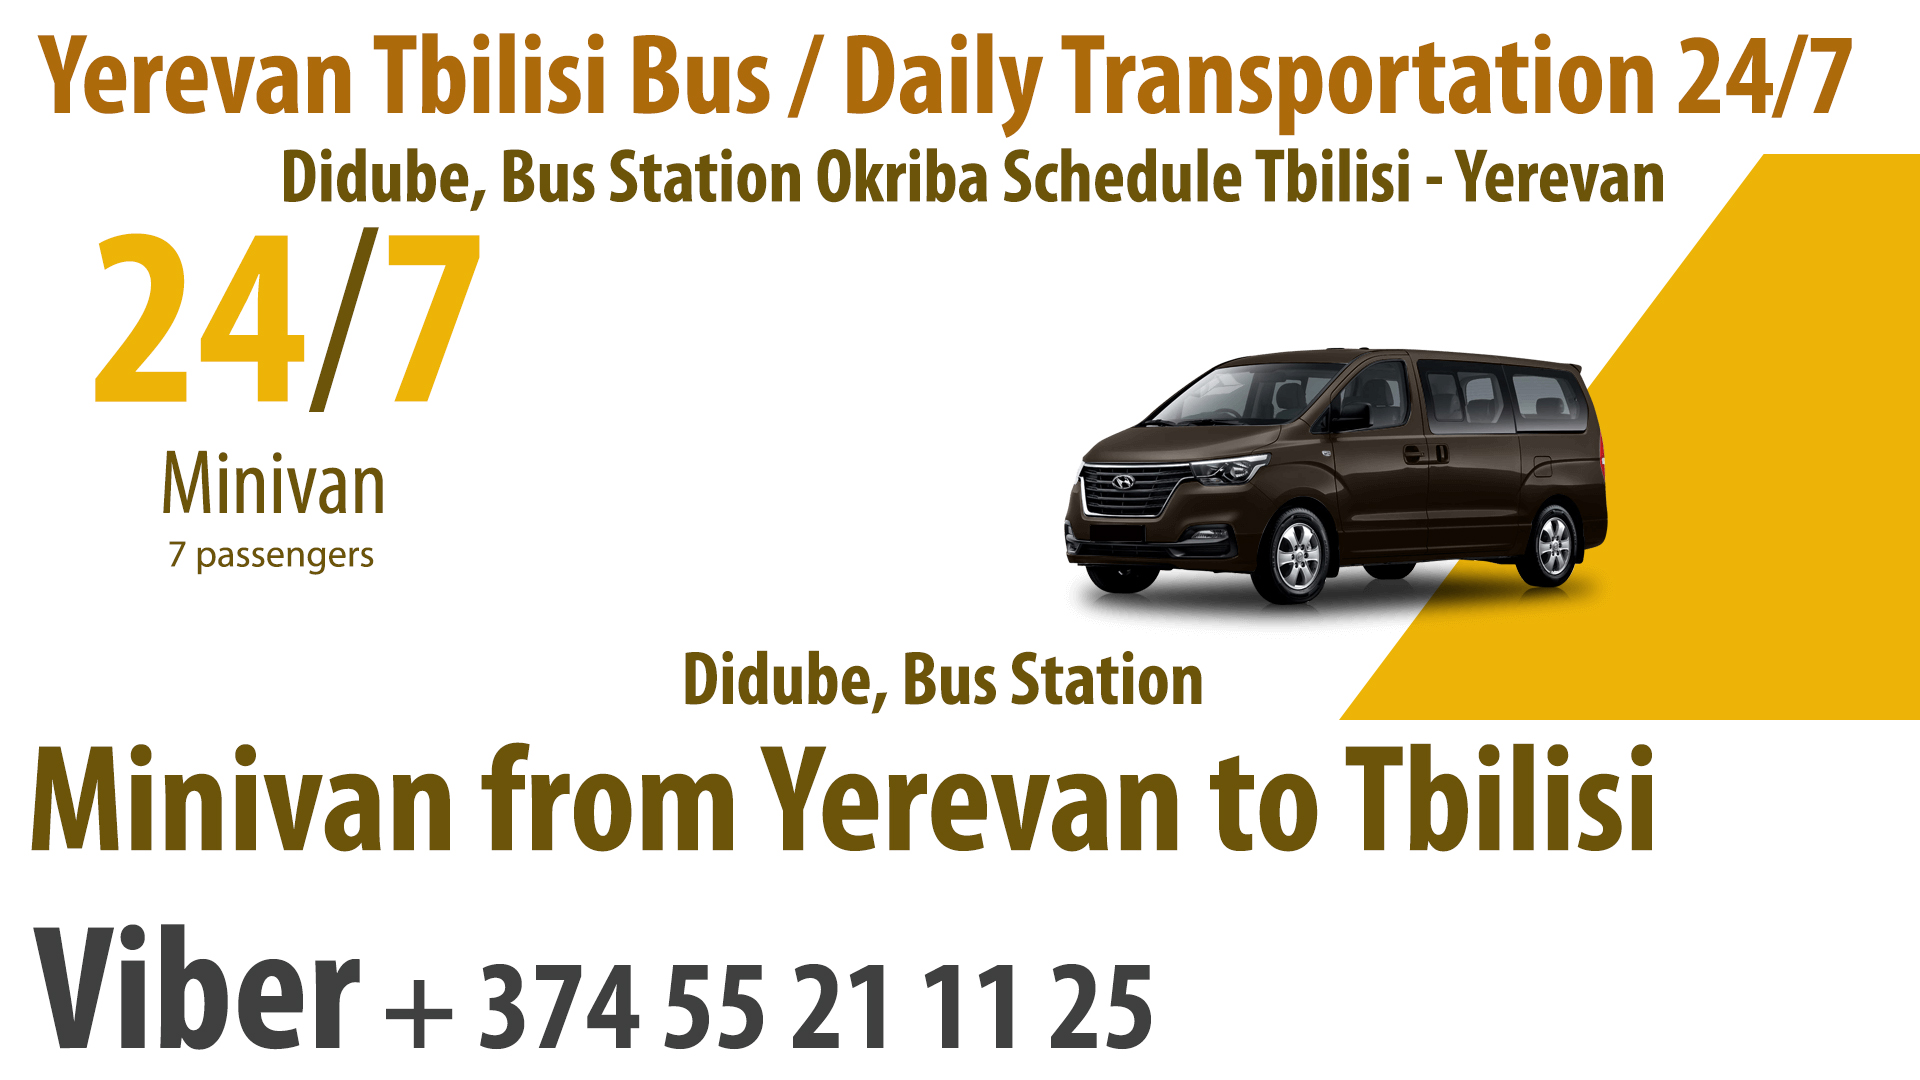 Didube, Bus Station Okriba Schedule Tbilisi - Yerevan